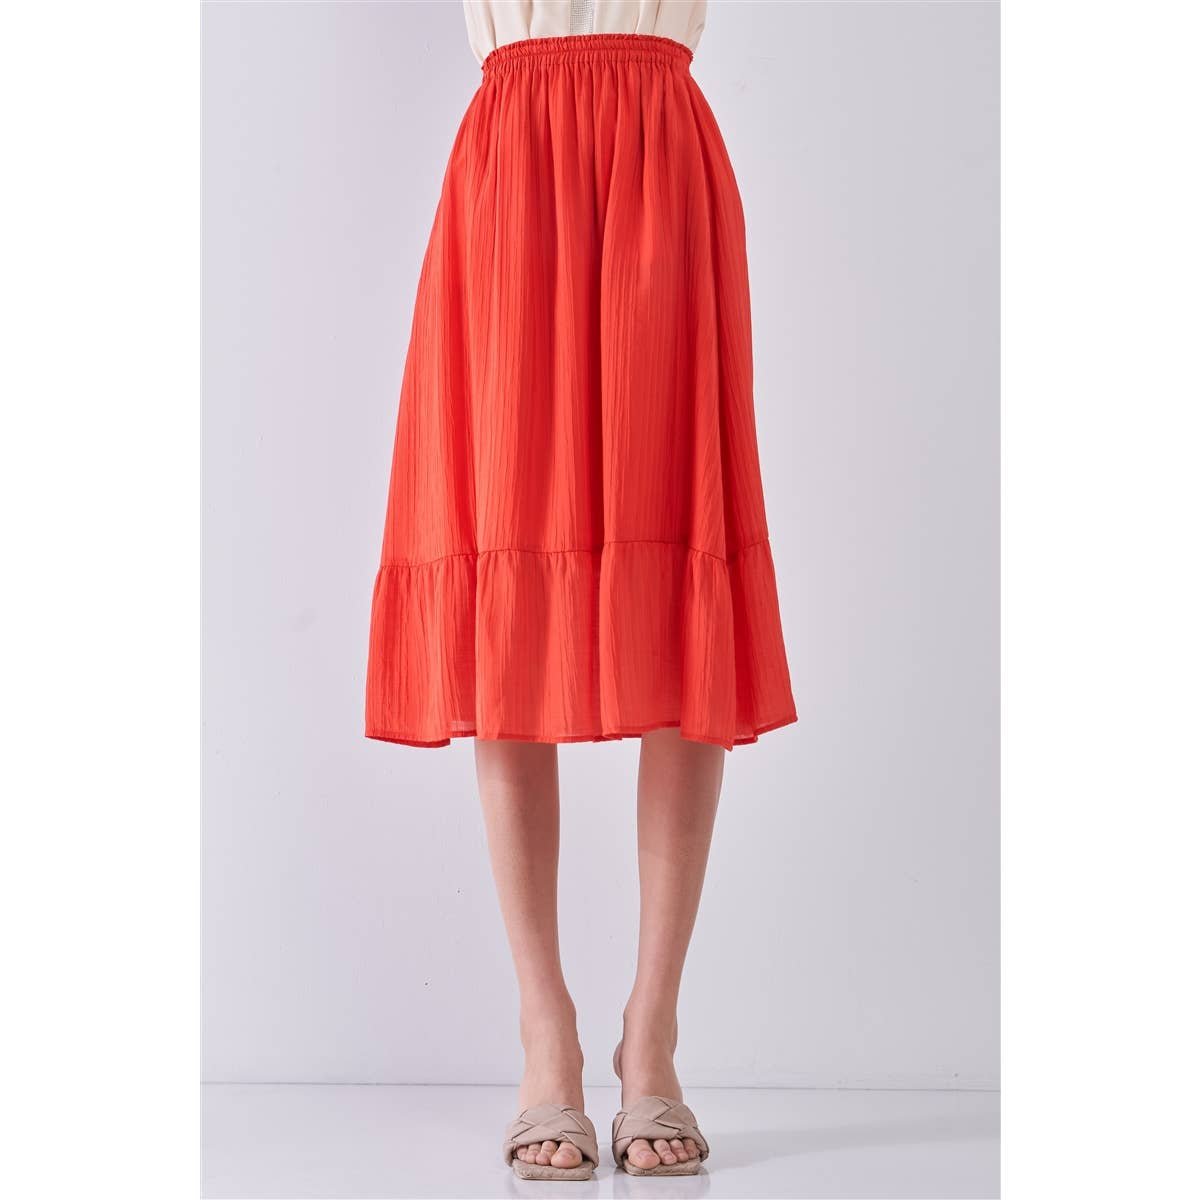 reasonable price Red High Waist Pleated Midi Skirt M ltp6XjedM just buy it